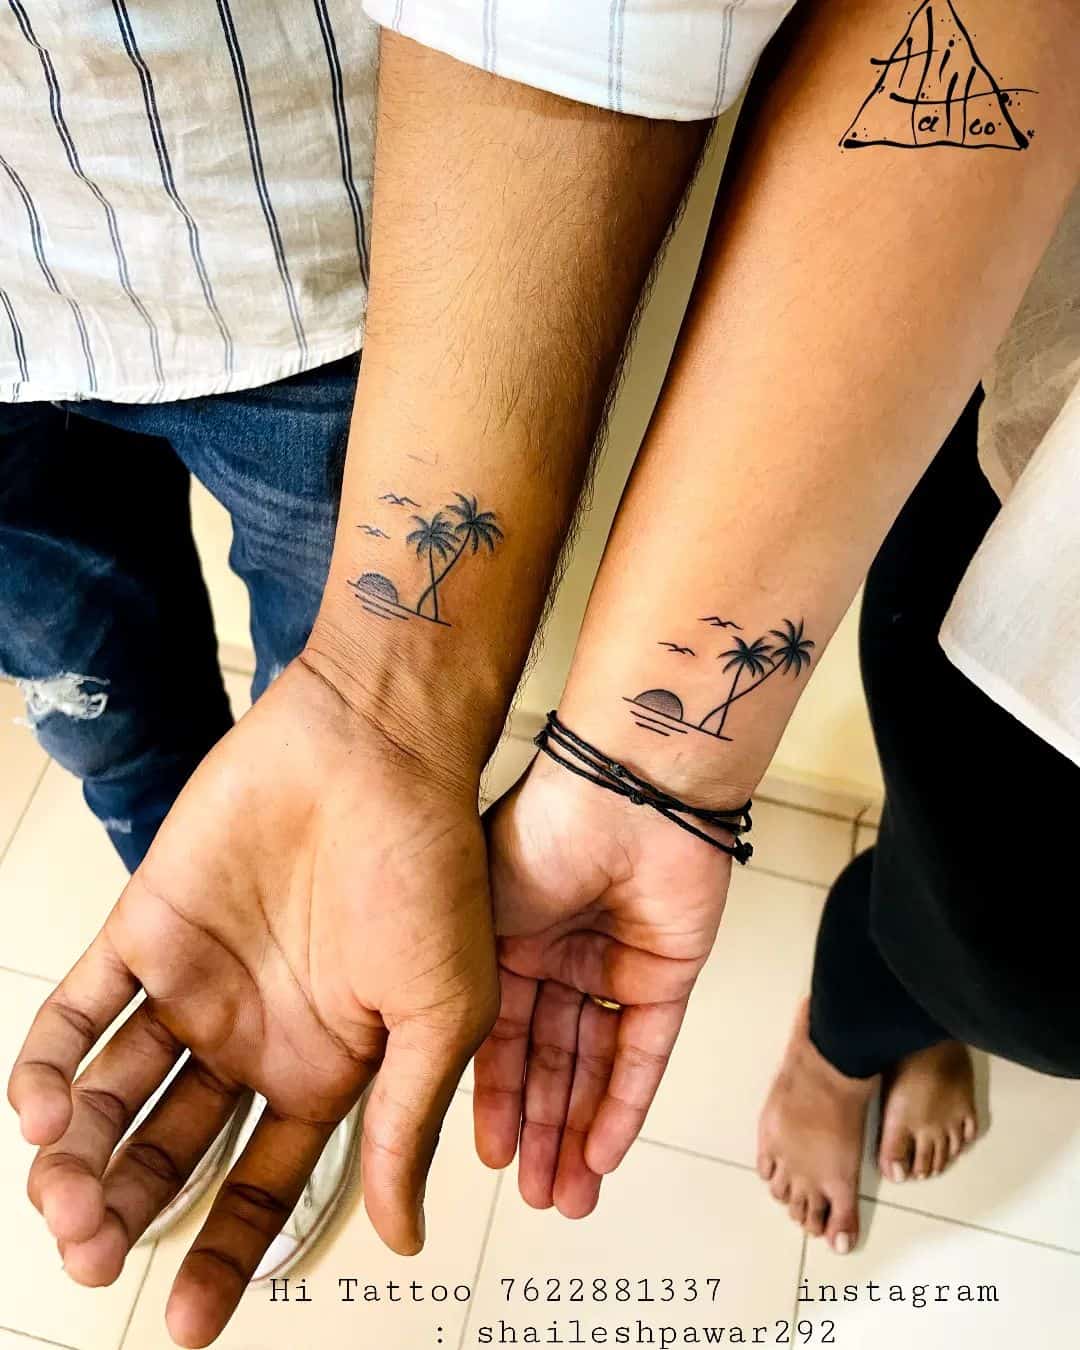 Cool palm matching tattoos